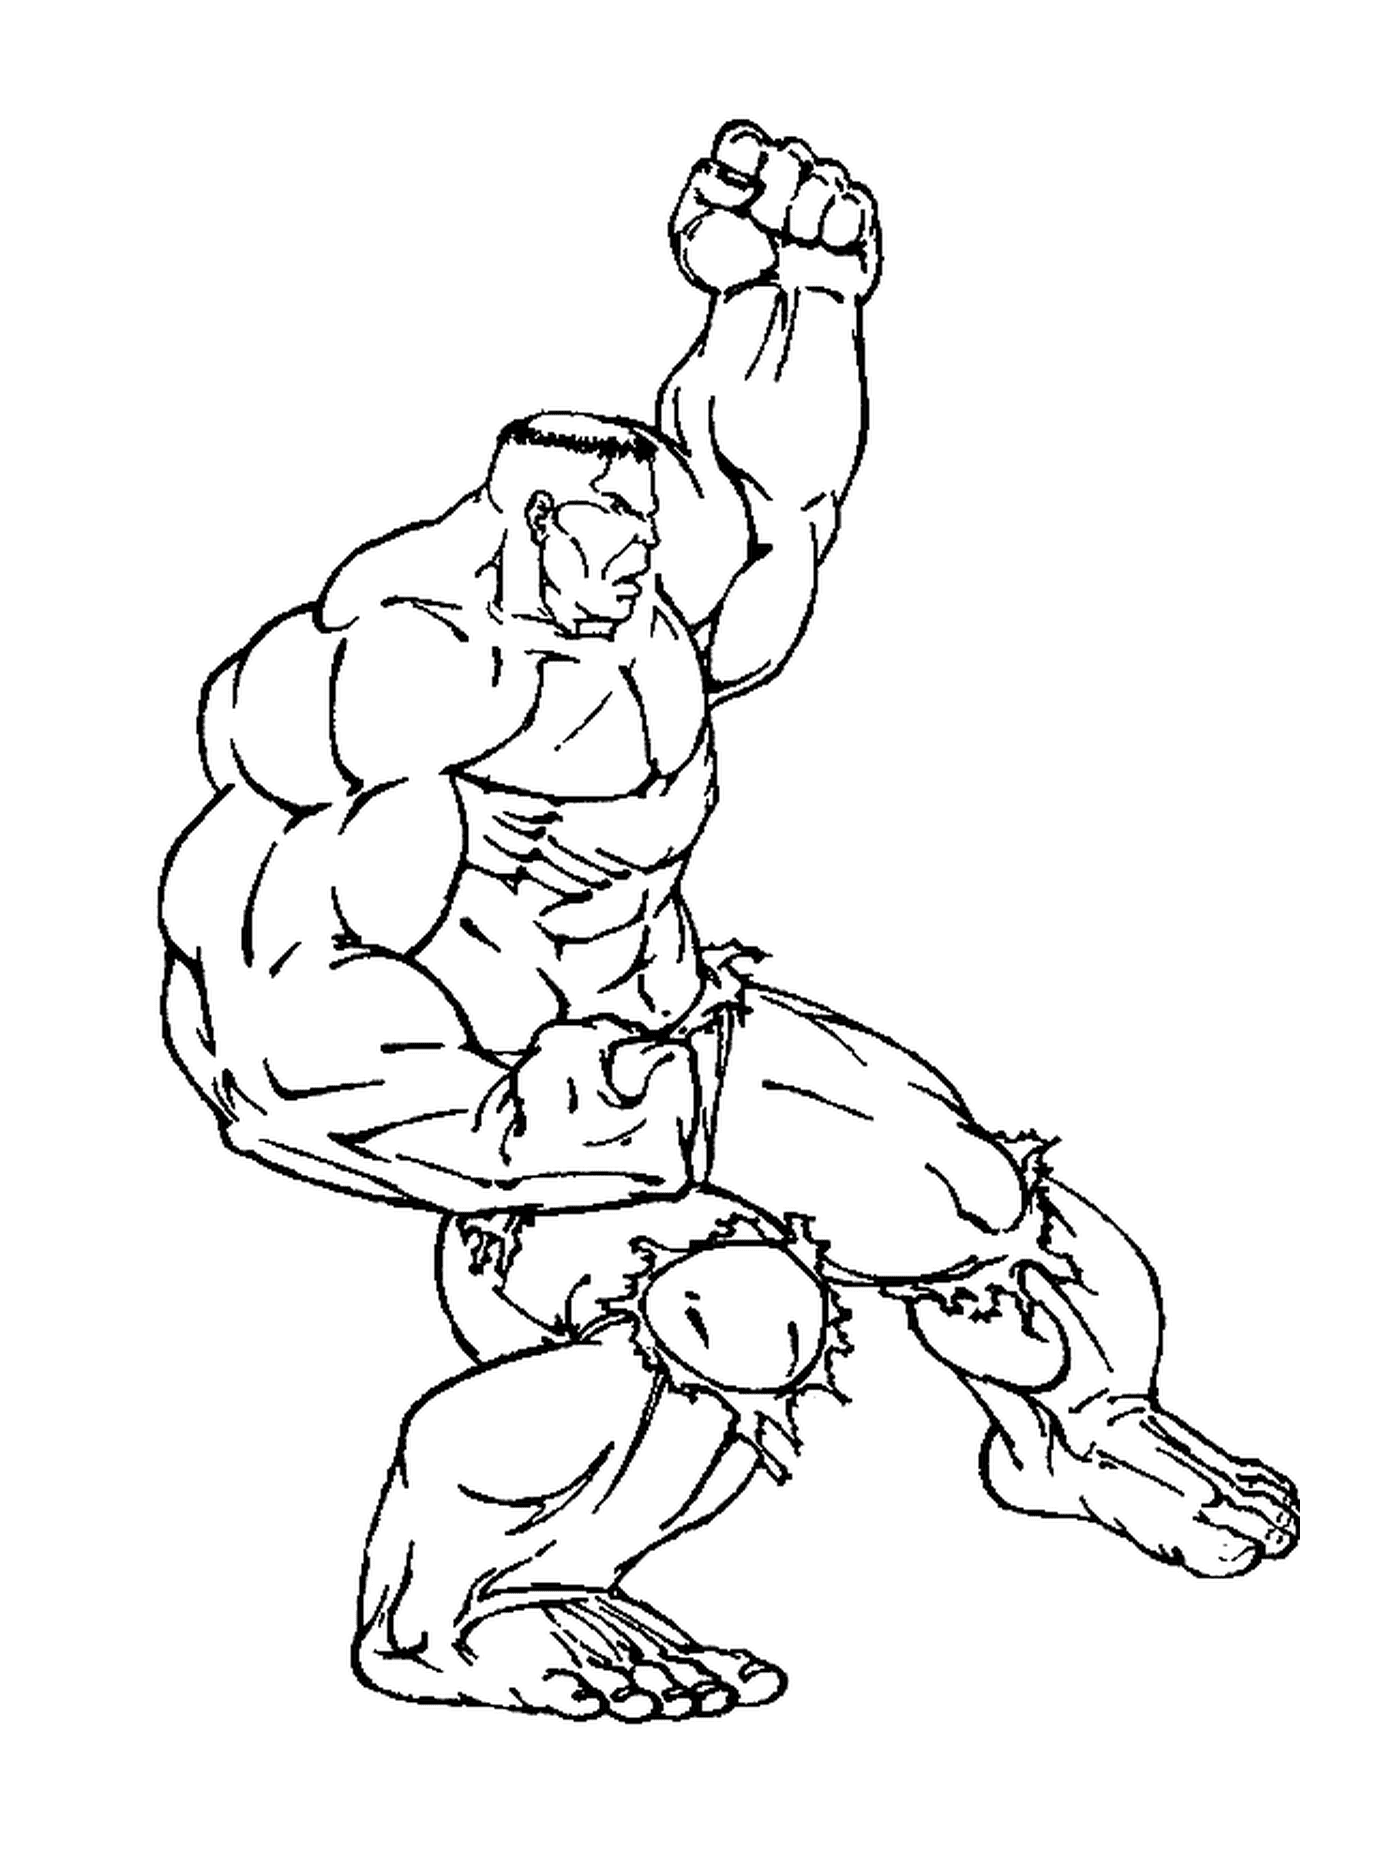  Hulk lifting his fist in the air 